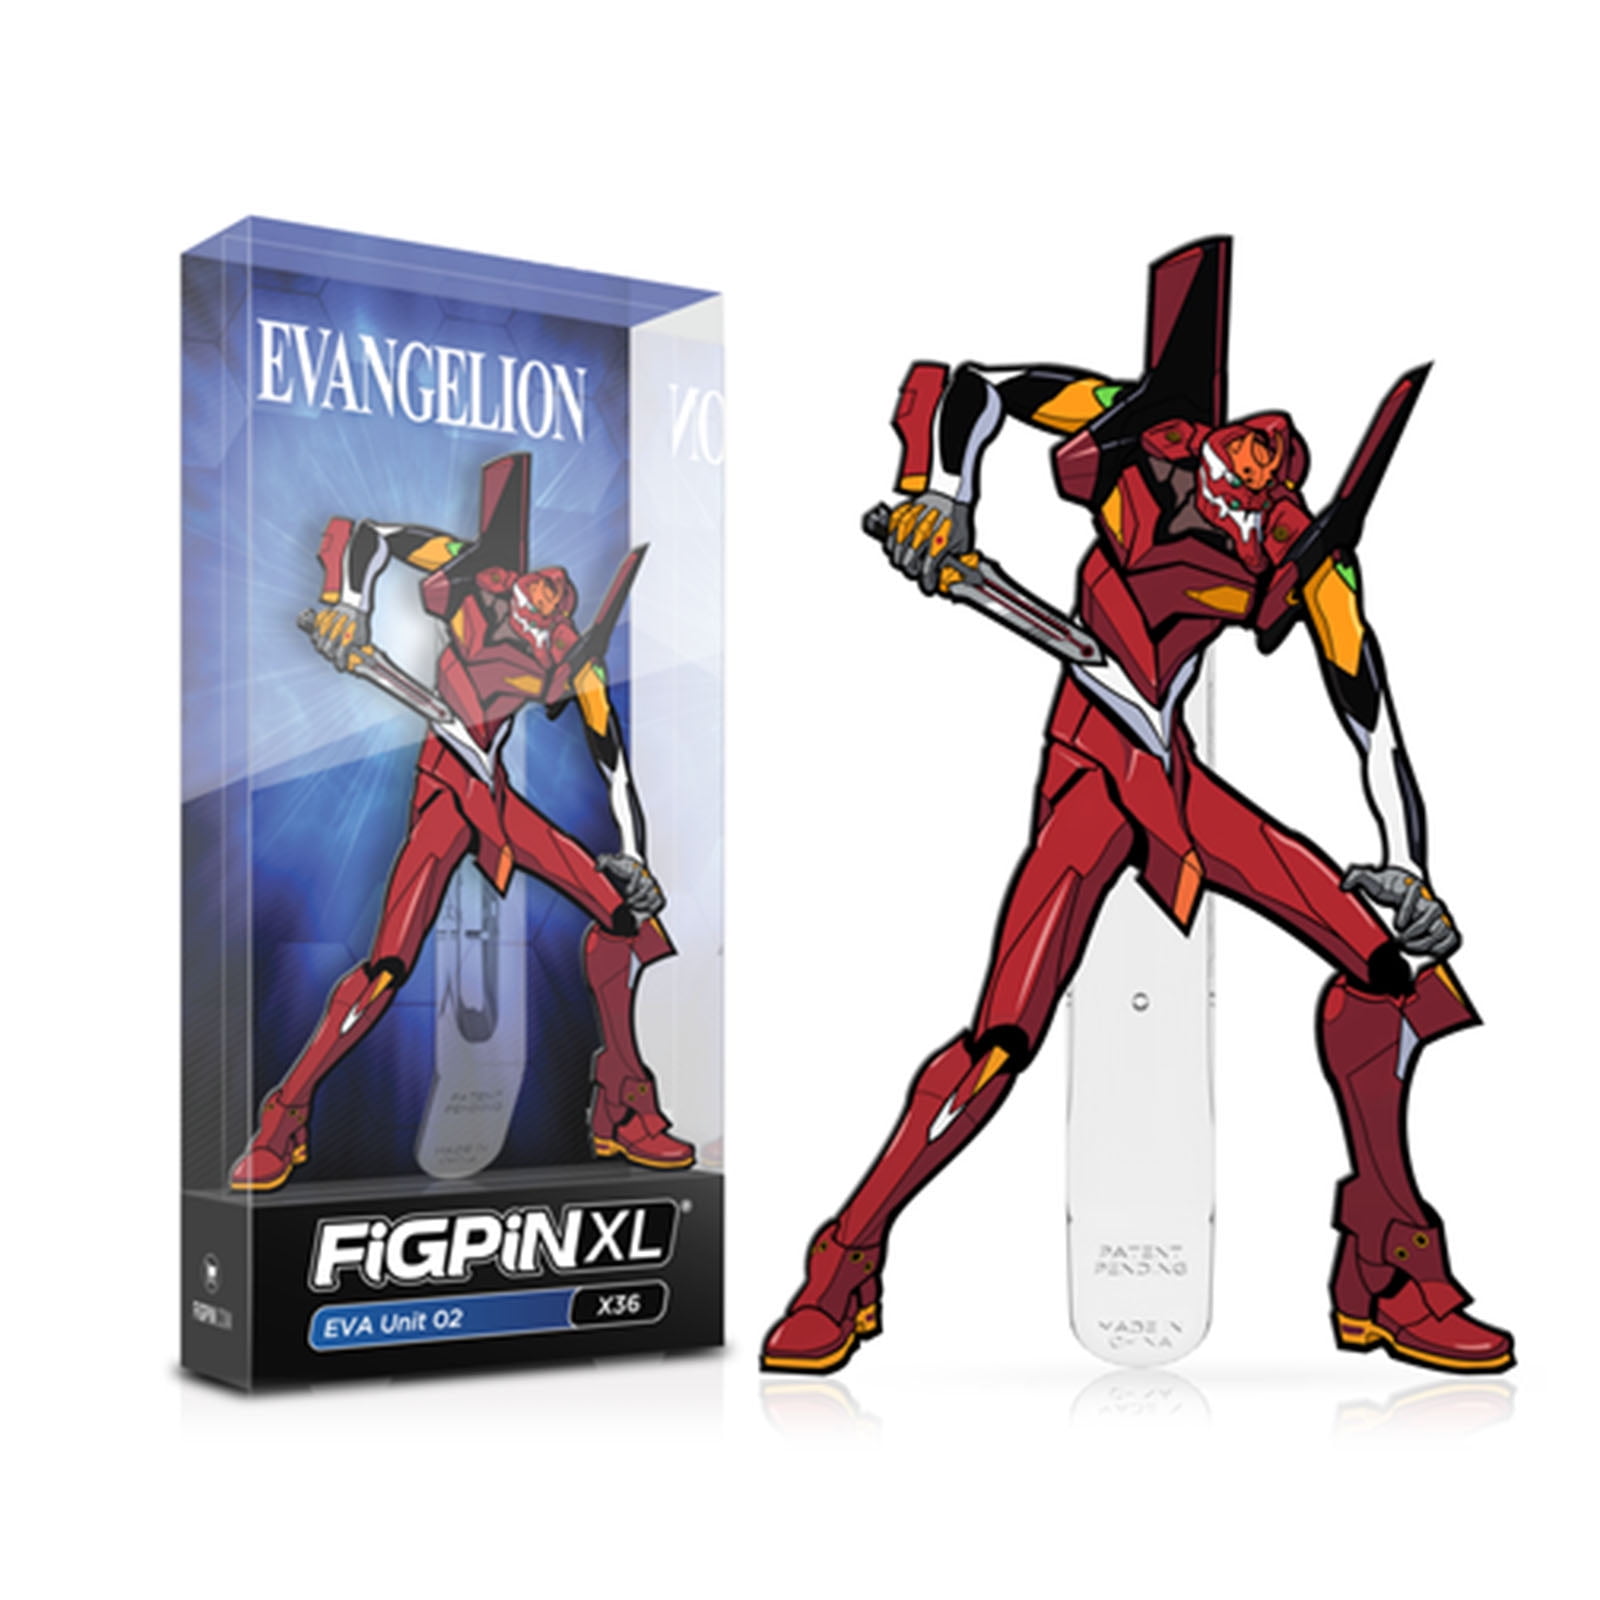 Evangelion Figpin XL Neon Genesis EVA Unit 01 Collectible Pin #X36